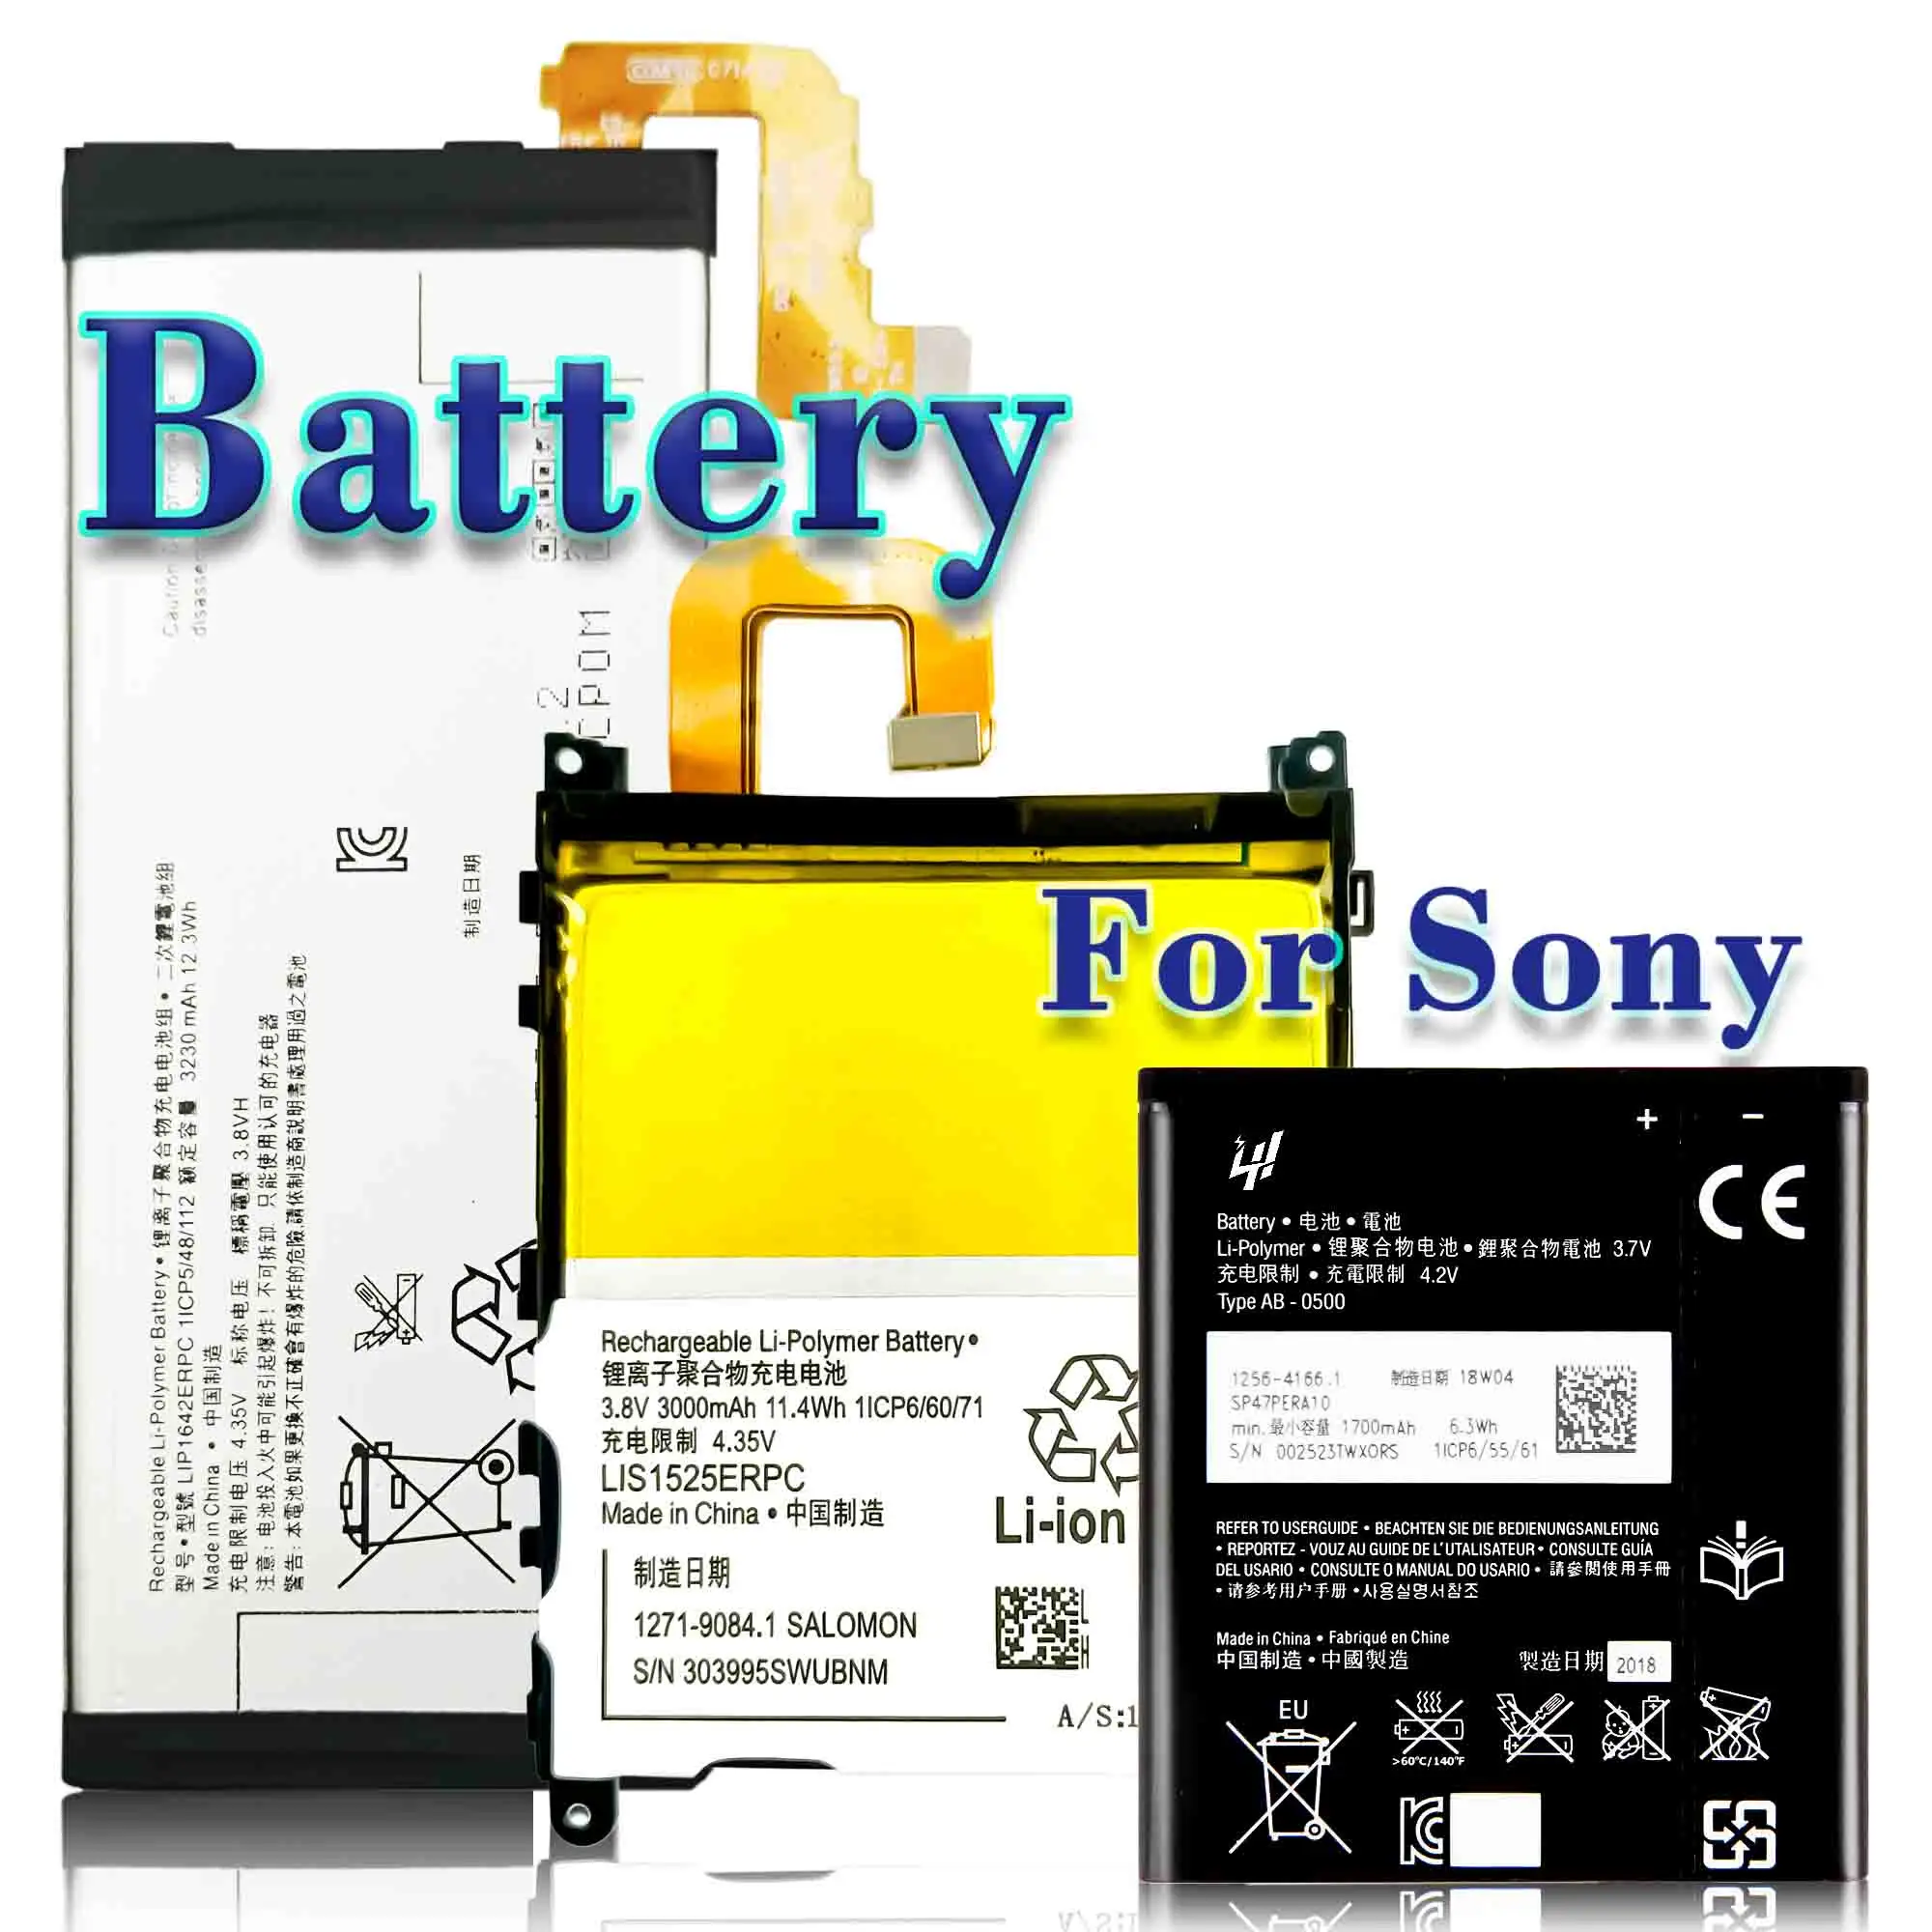 Sony Xperia Z — batterie d'origine, gamme complète de batteries, Z1 Z2 Z3 Z4 Z5 xxxz XZ1 XZ2 1 2 3 4 5 10 pro L1 L2 L3 L4, OEM